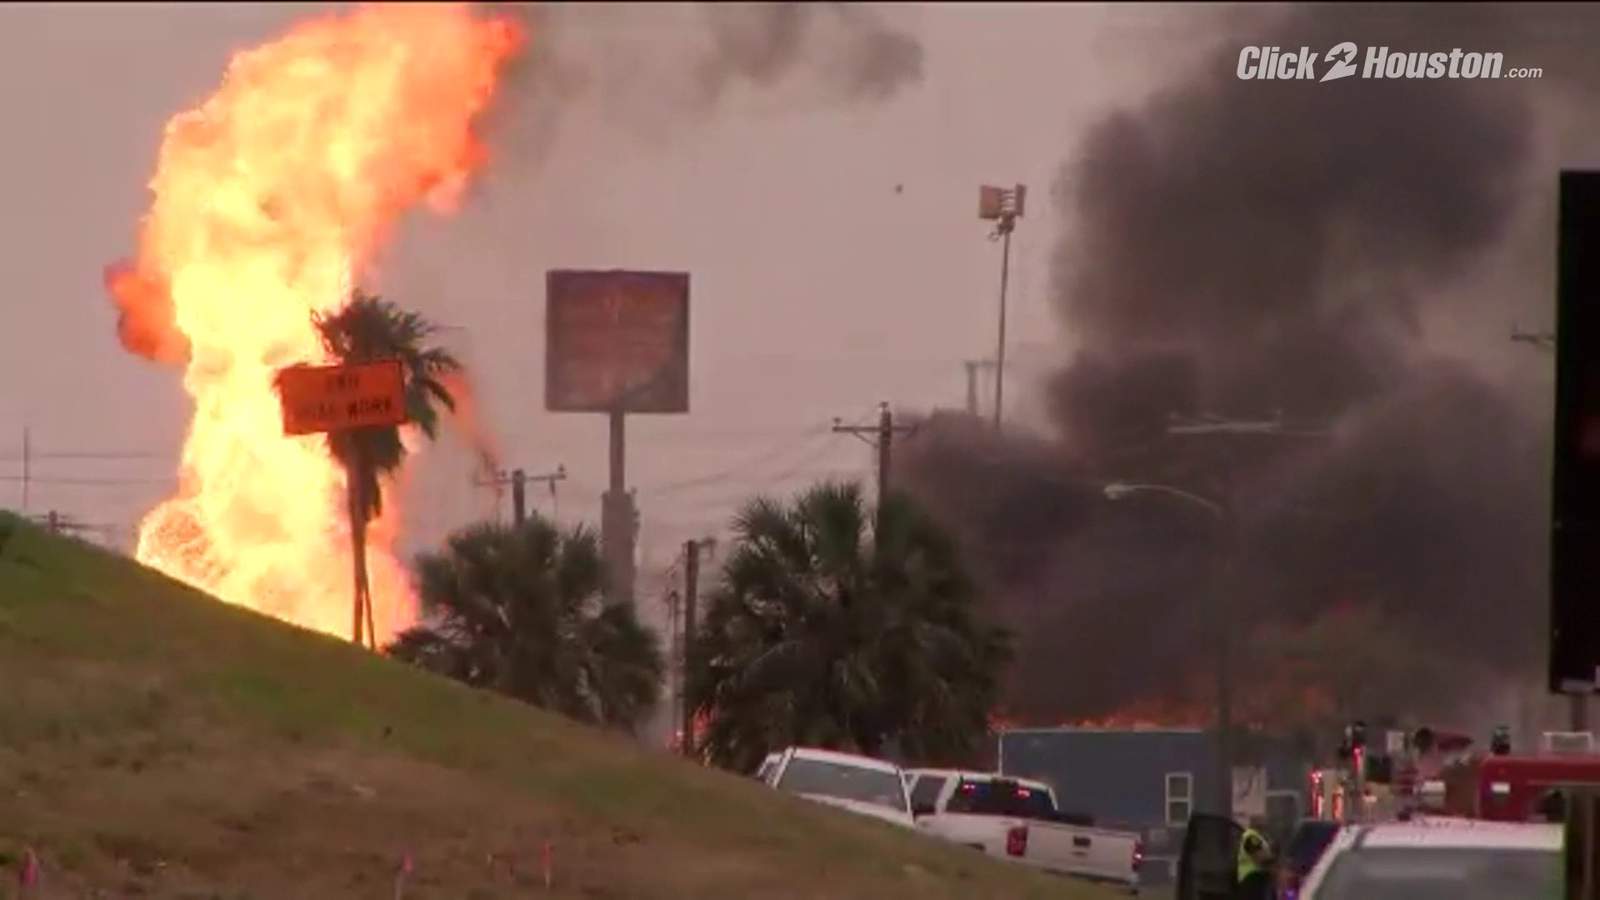 Fire crews in Corpus Christi battle 150-feet flames after gas line rupture, officials say